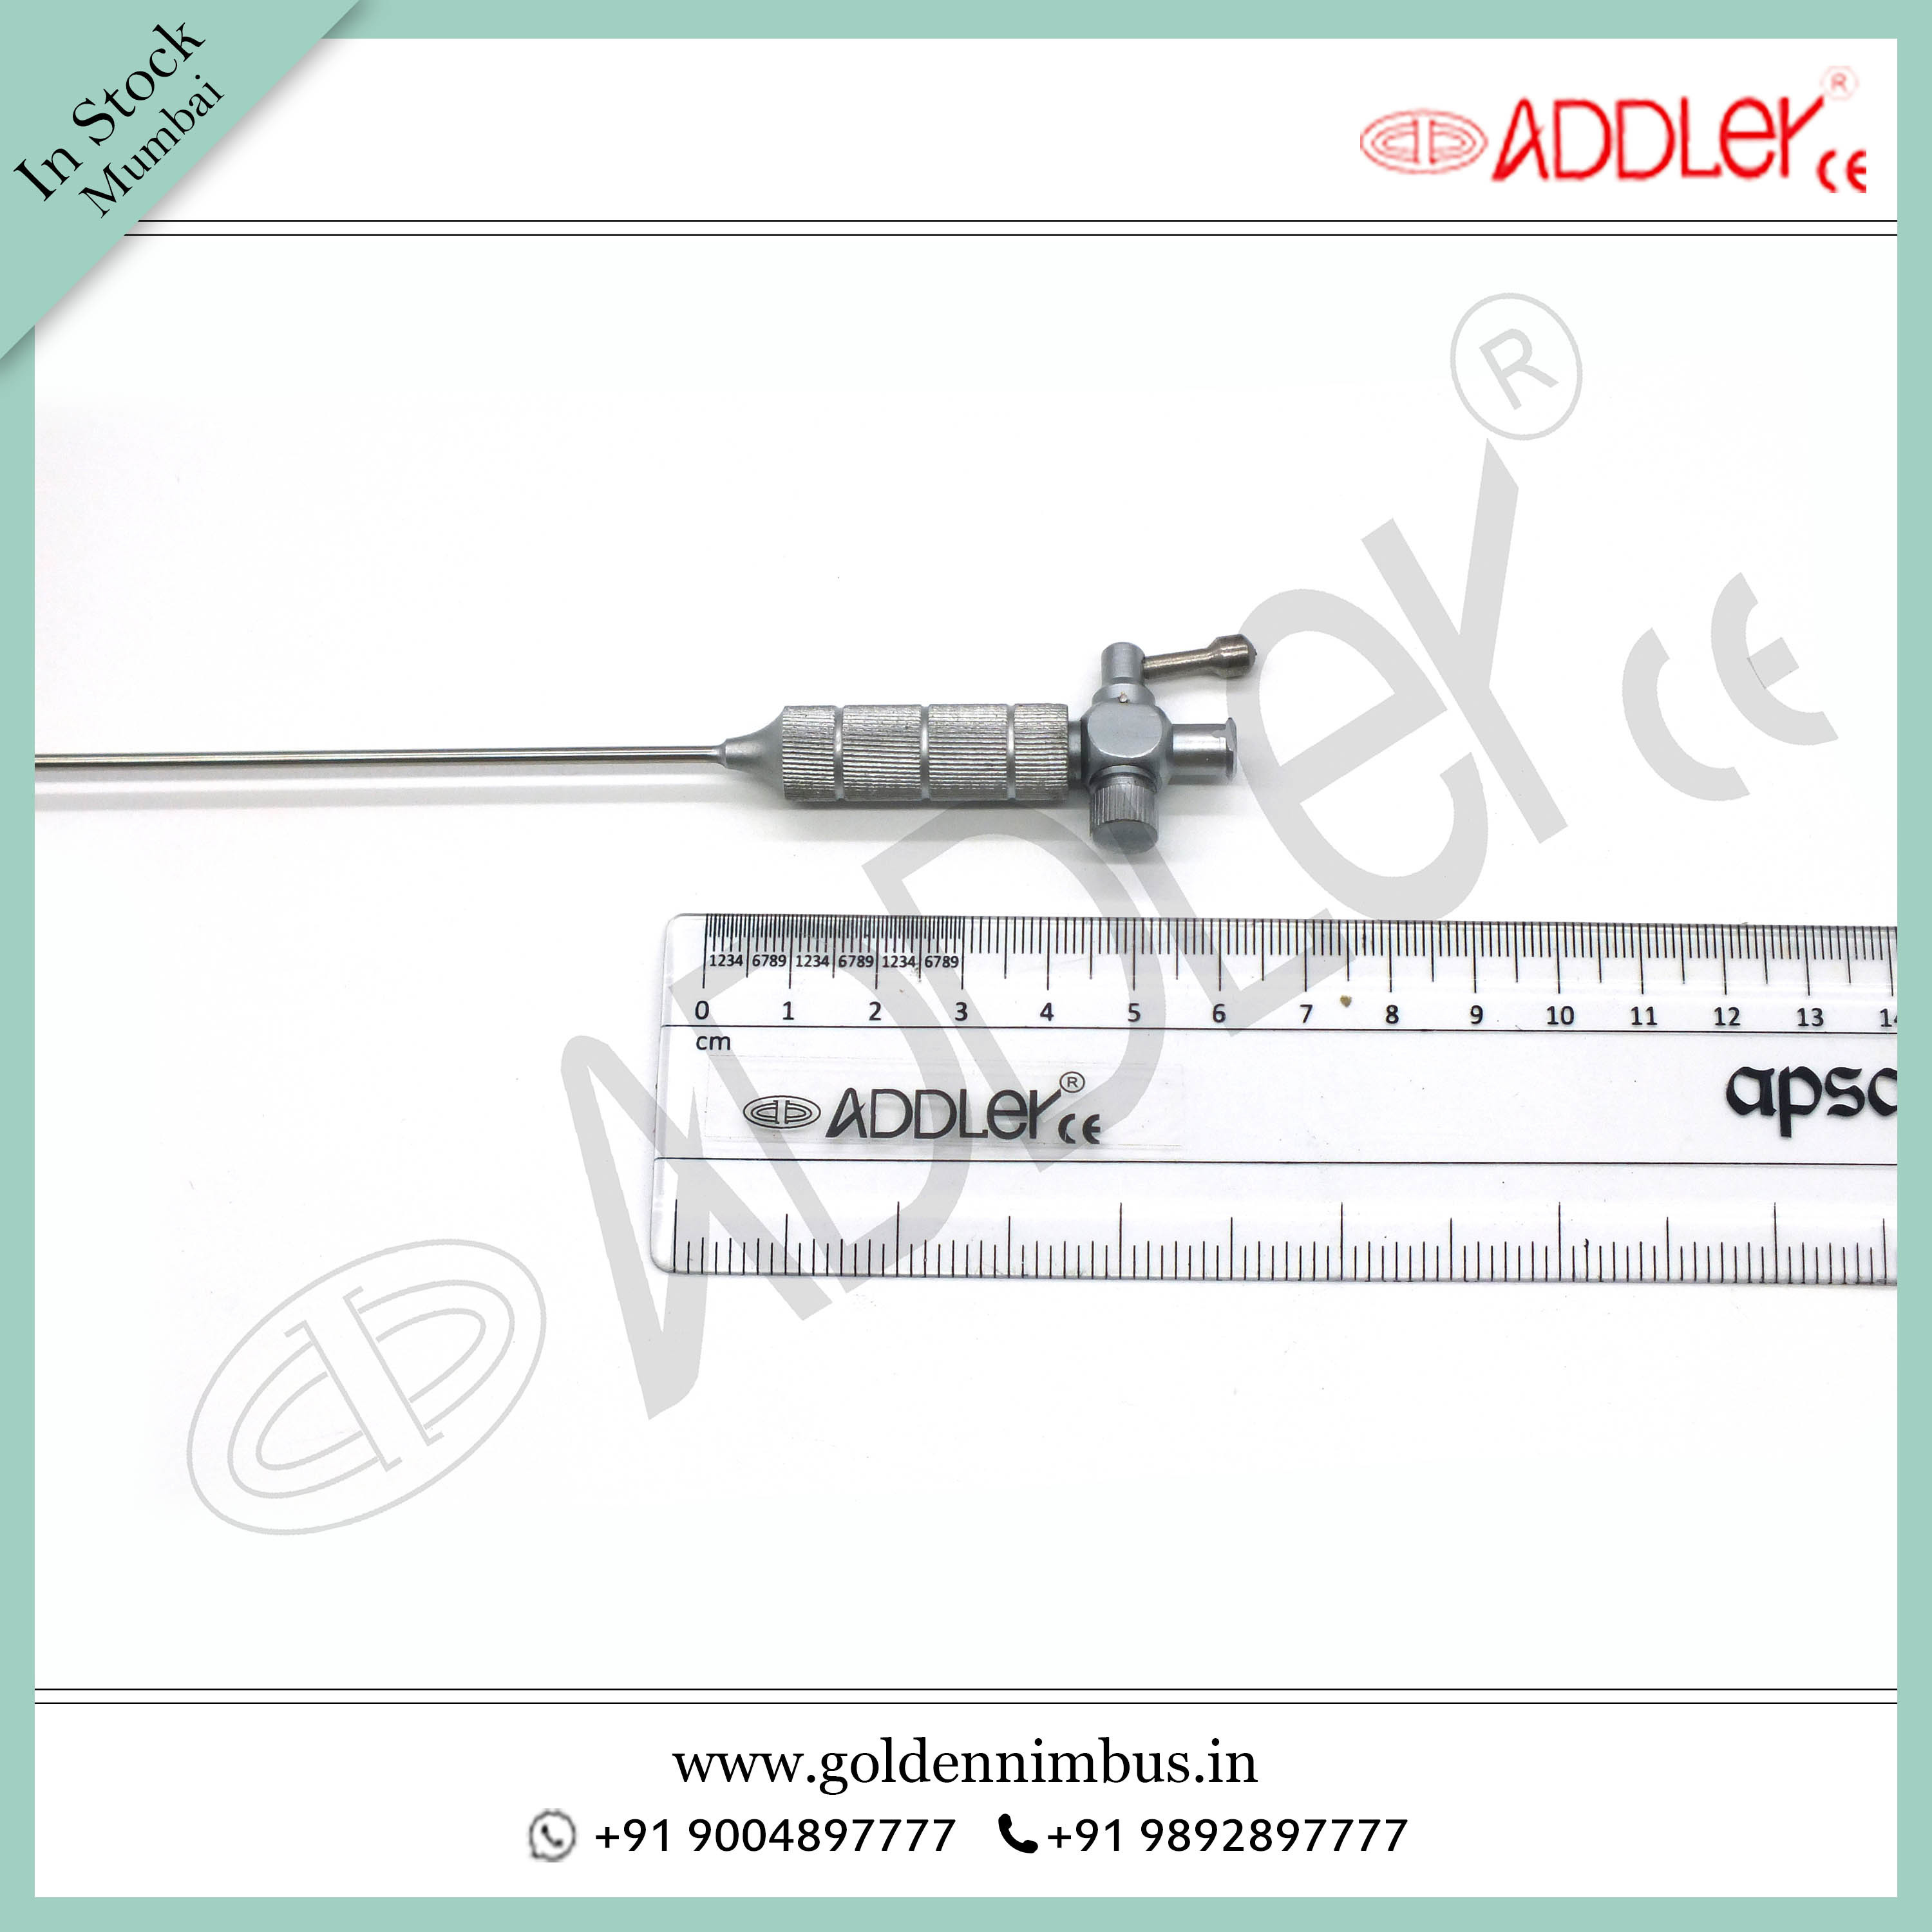 ADDLER Laparoscopic Veress Needle Set of 2 - 120mm and 140mm